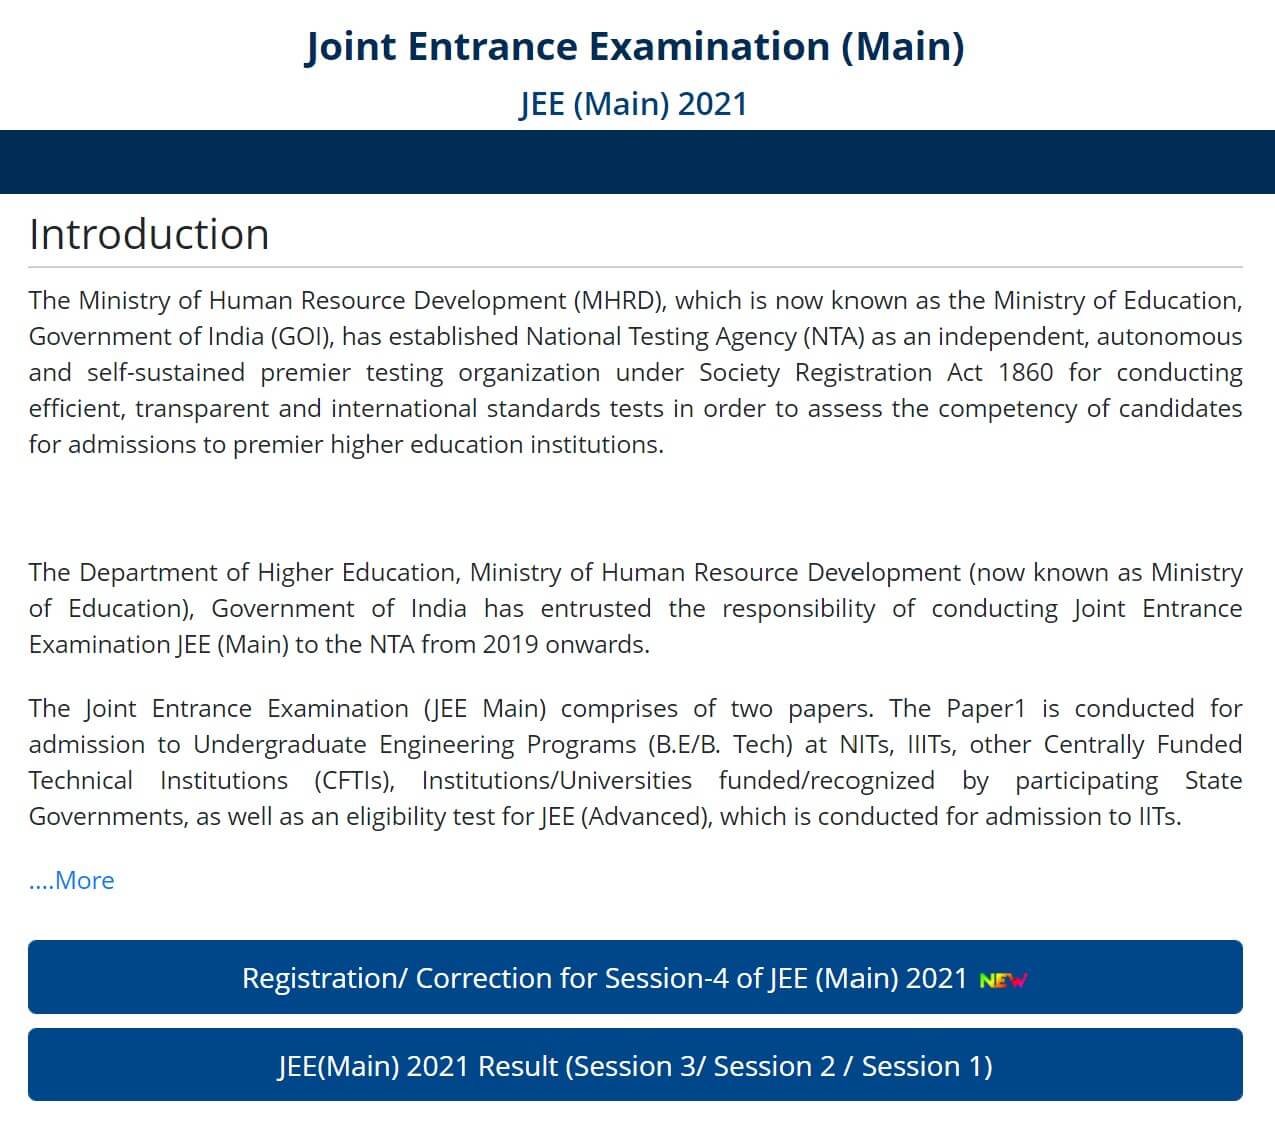 JEE Main 2021 Session-4 Registrations Open Screenshot